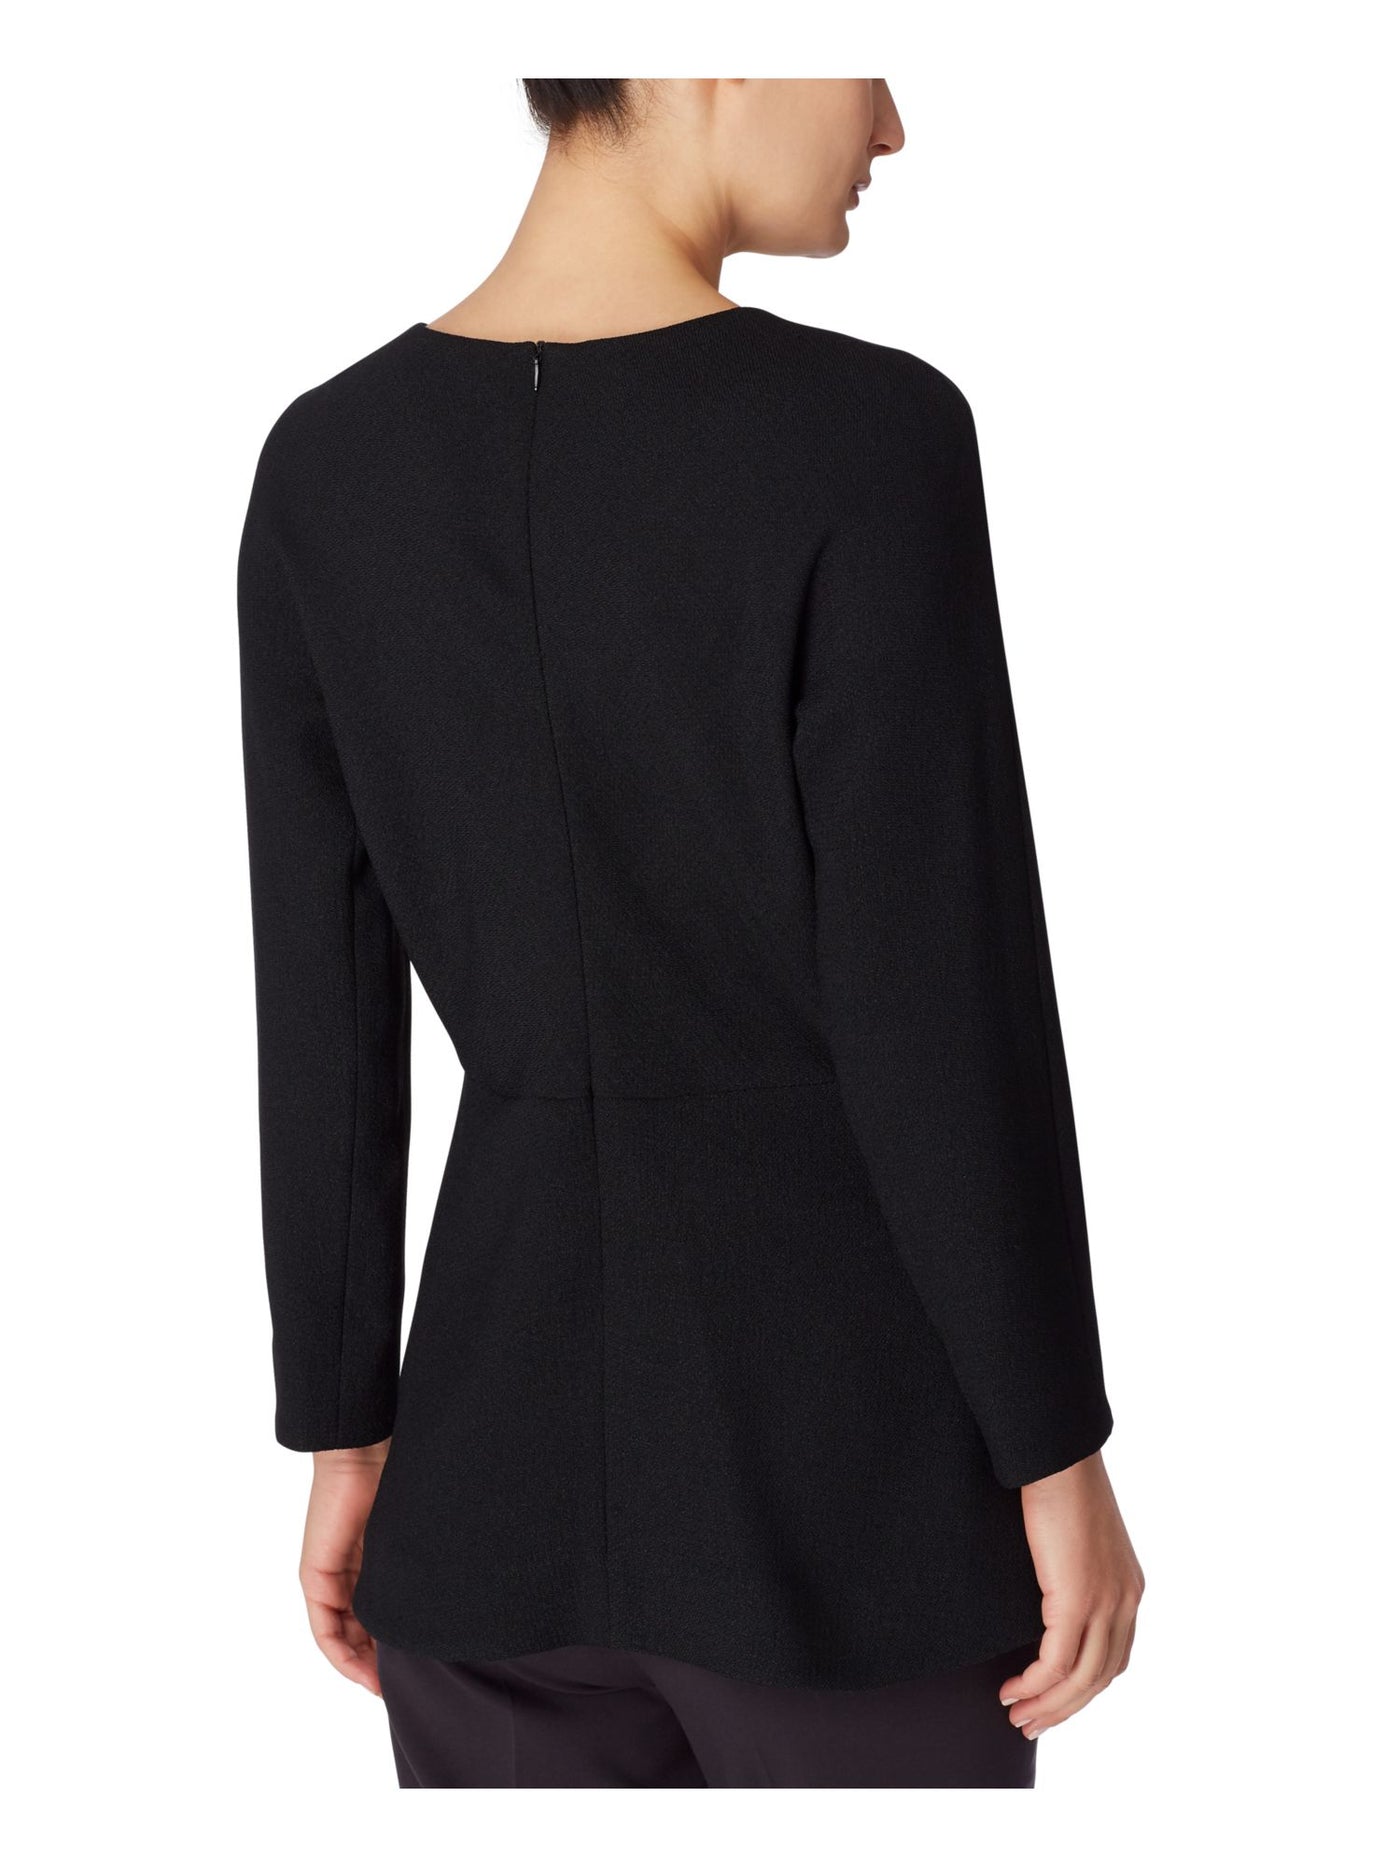 ANNE KLEIN Womens Black Stretch Zippered Textured Blouse Long Sleeve Round Neck Wear To Work Peplum Top 4